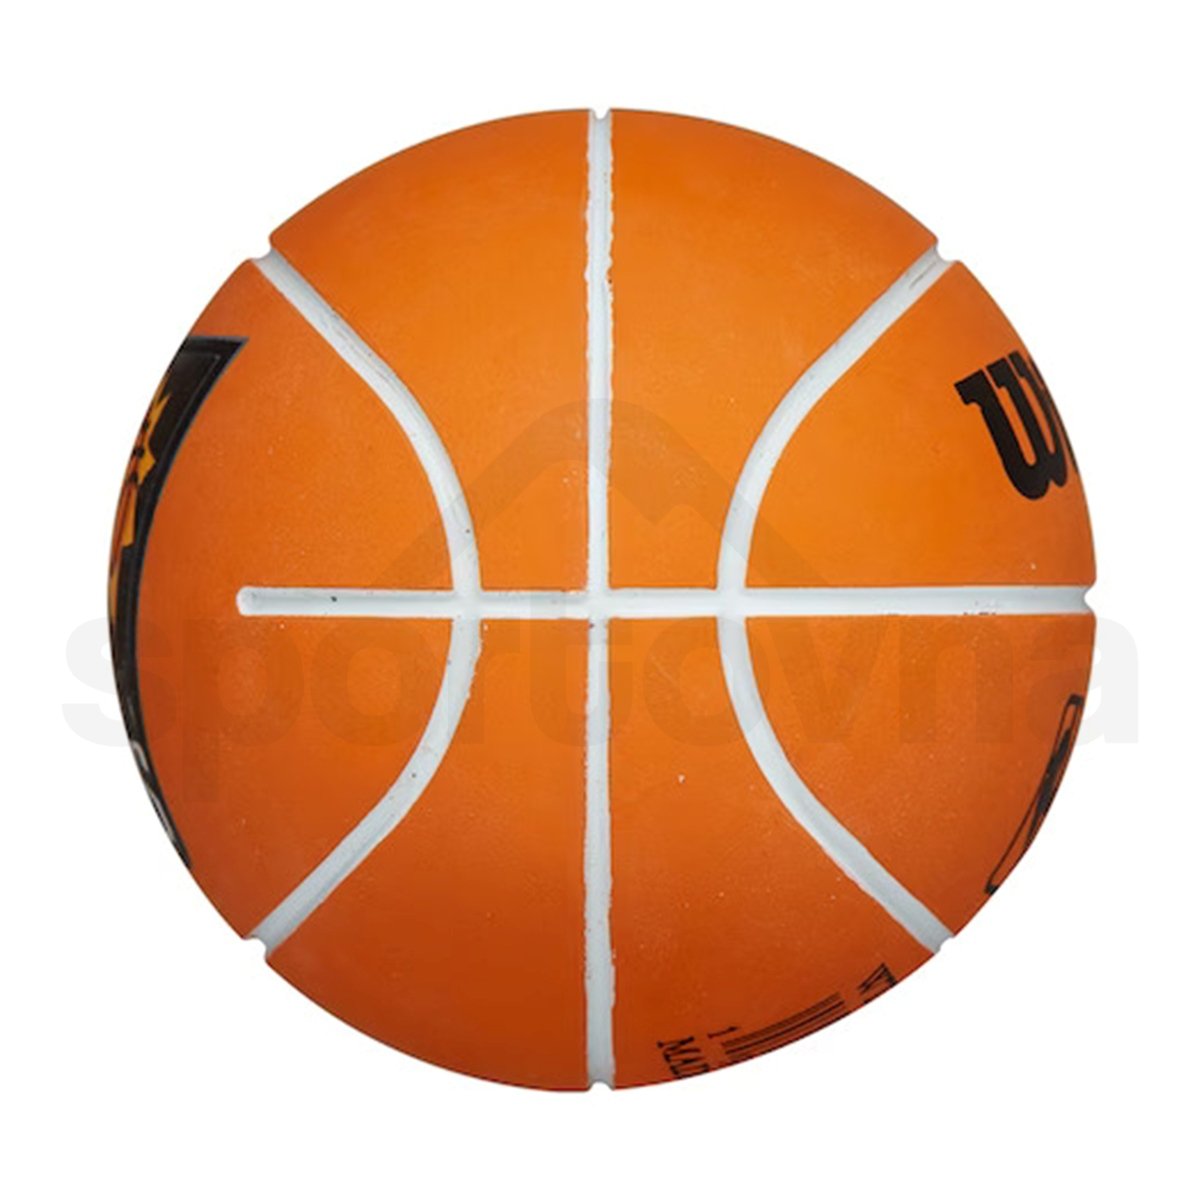 Míč Wilson NBA Dribbler Bskt Pho Suns - oranžová